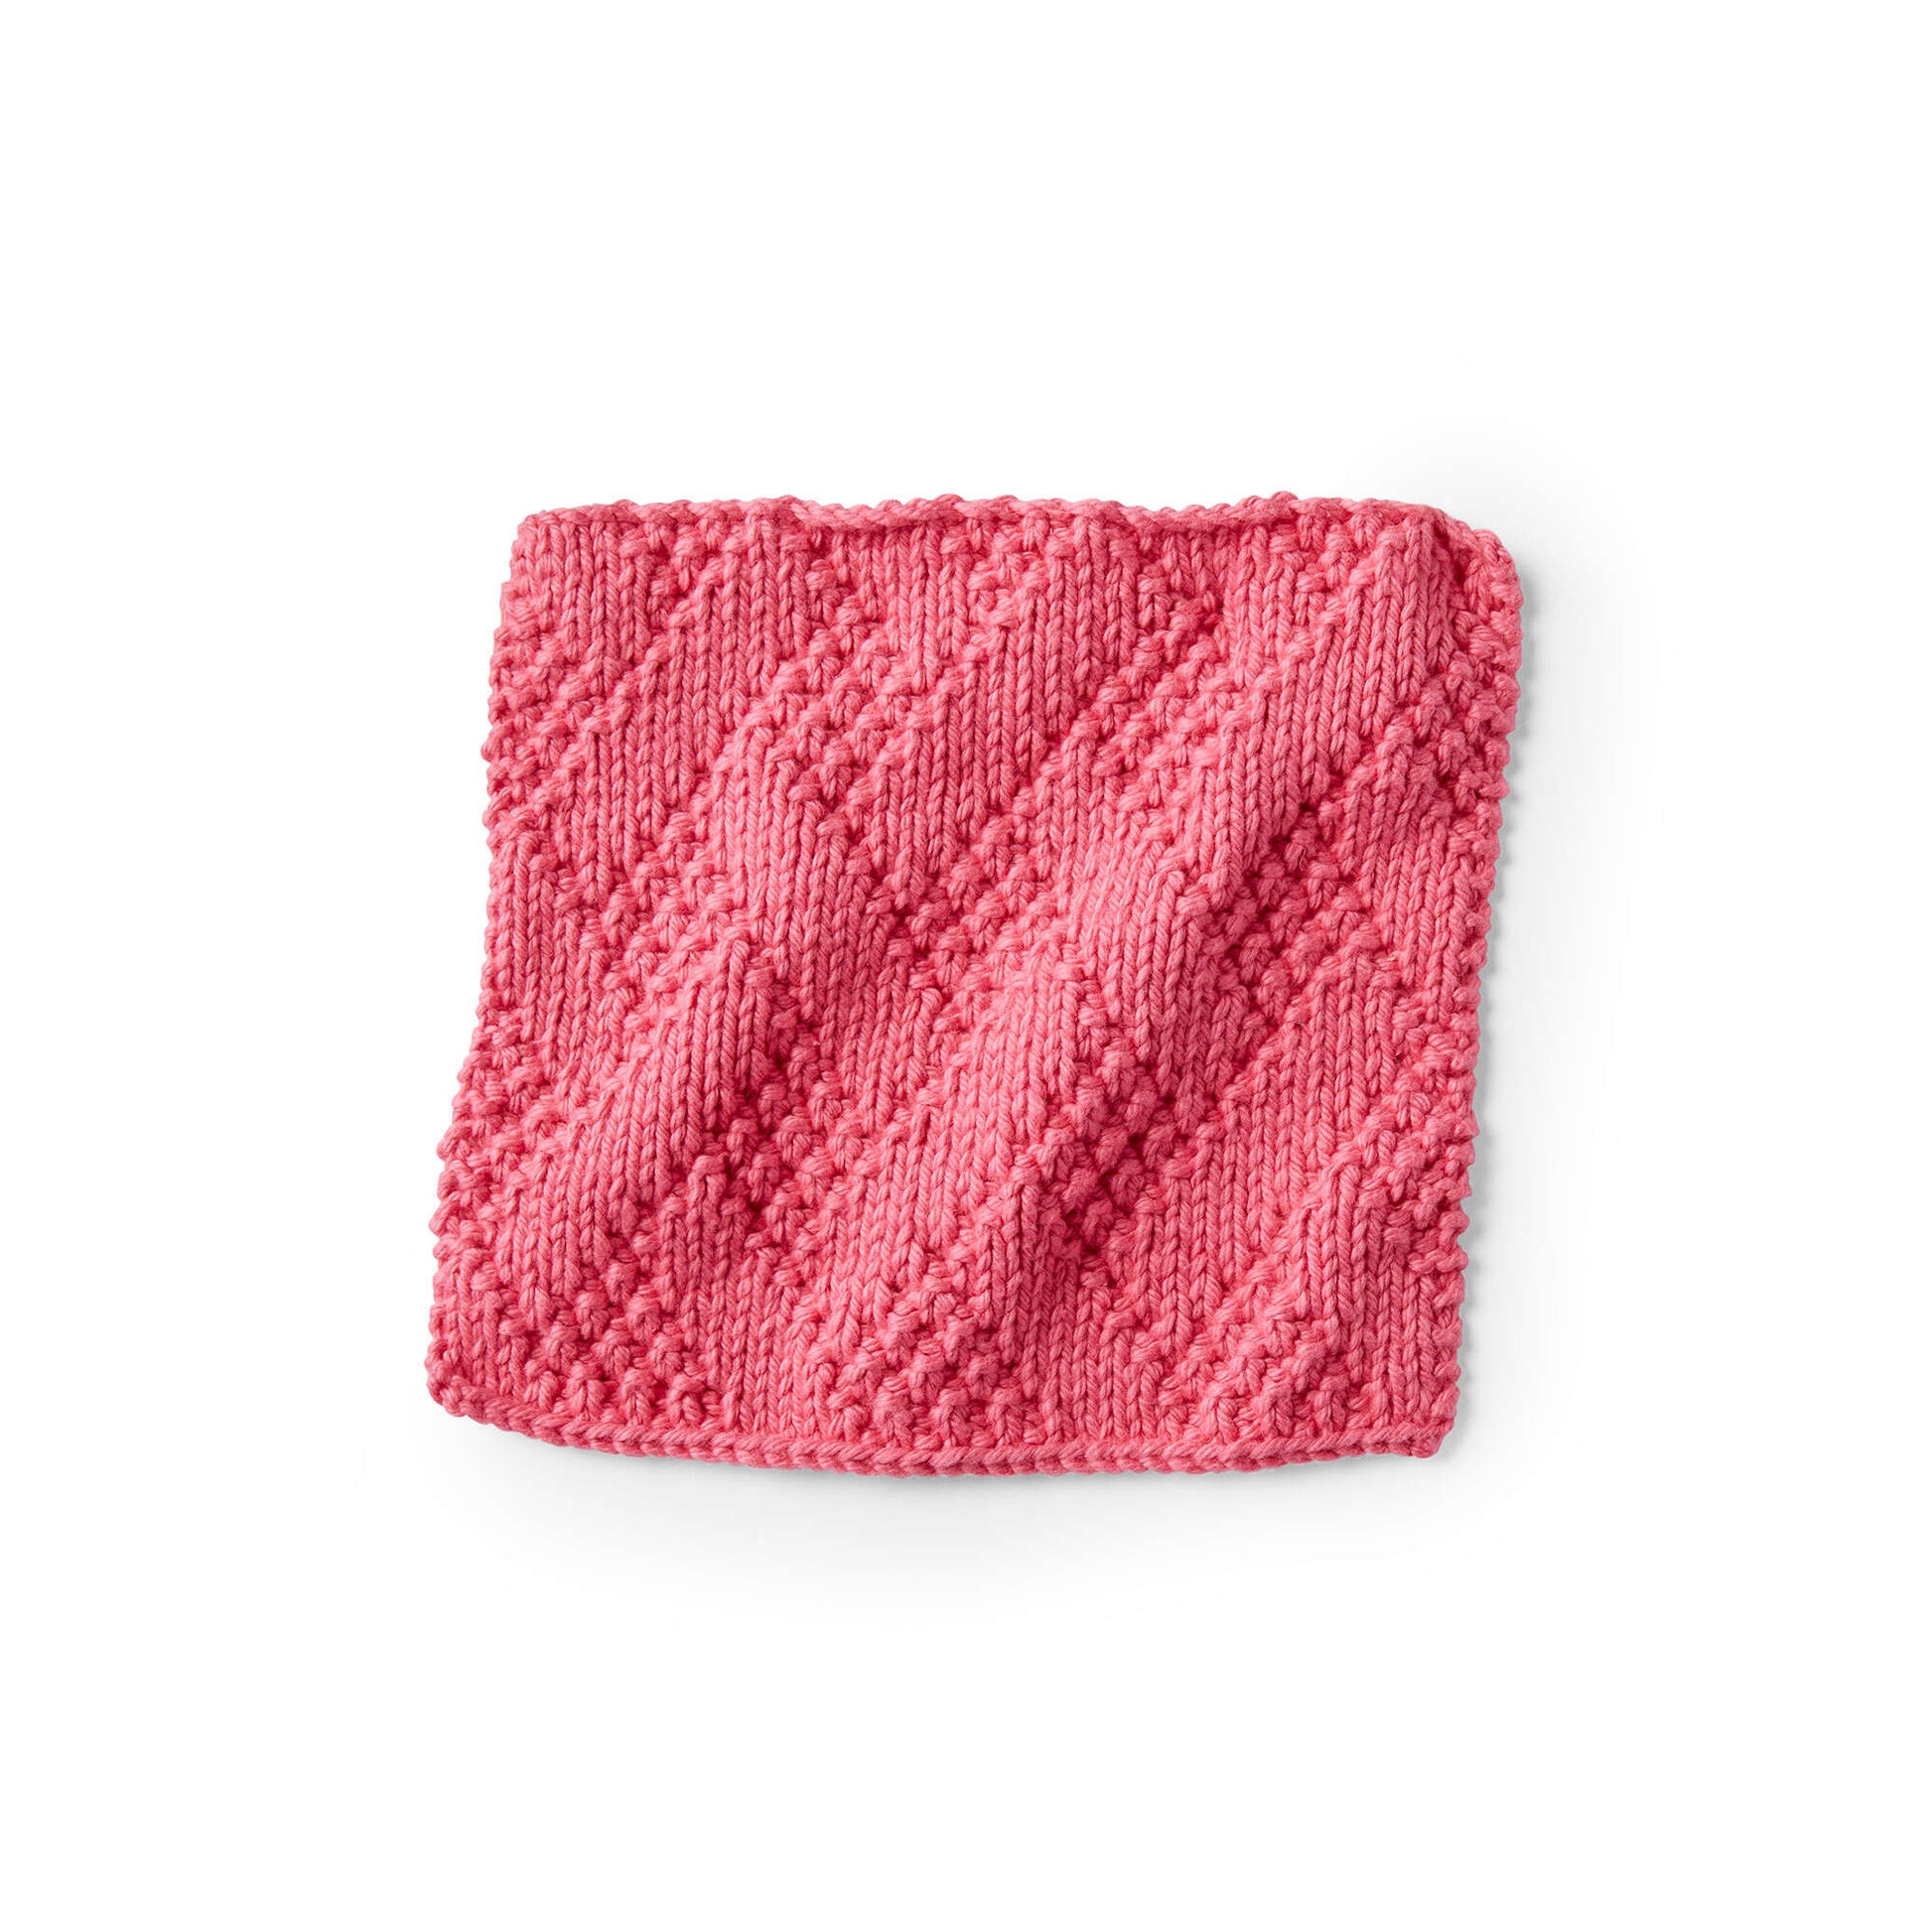 Free Red Heart Chevron Dishcloth Knit Pattern